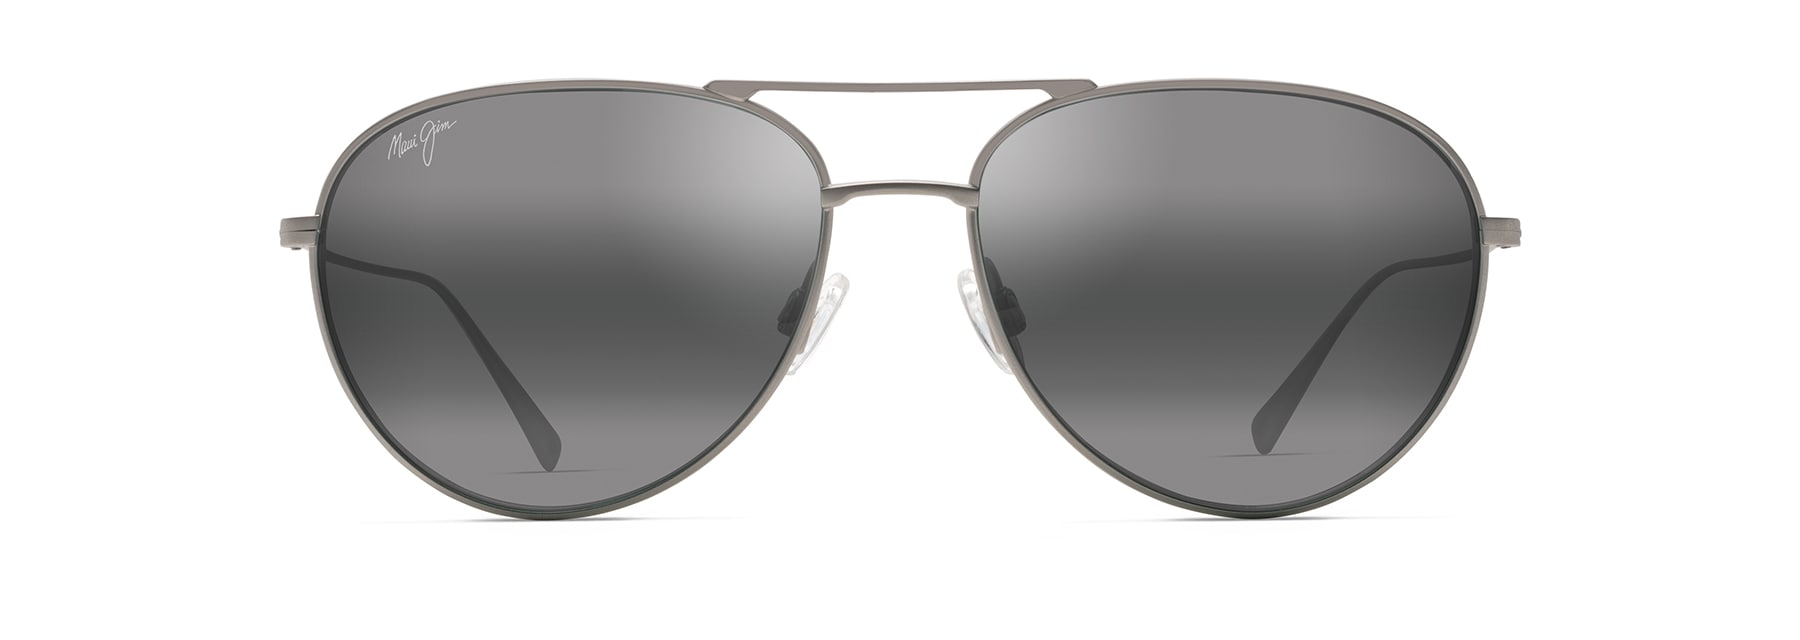 Buy Maui Jim Walaka 885-17 Matte Titanium prescription Sunglasses